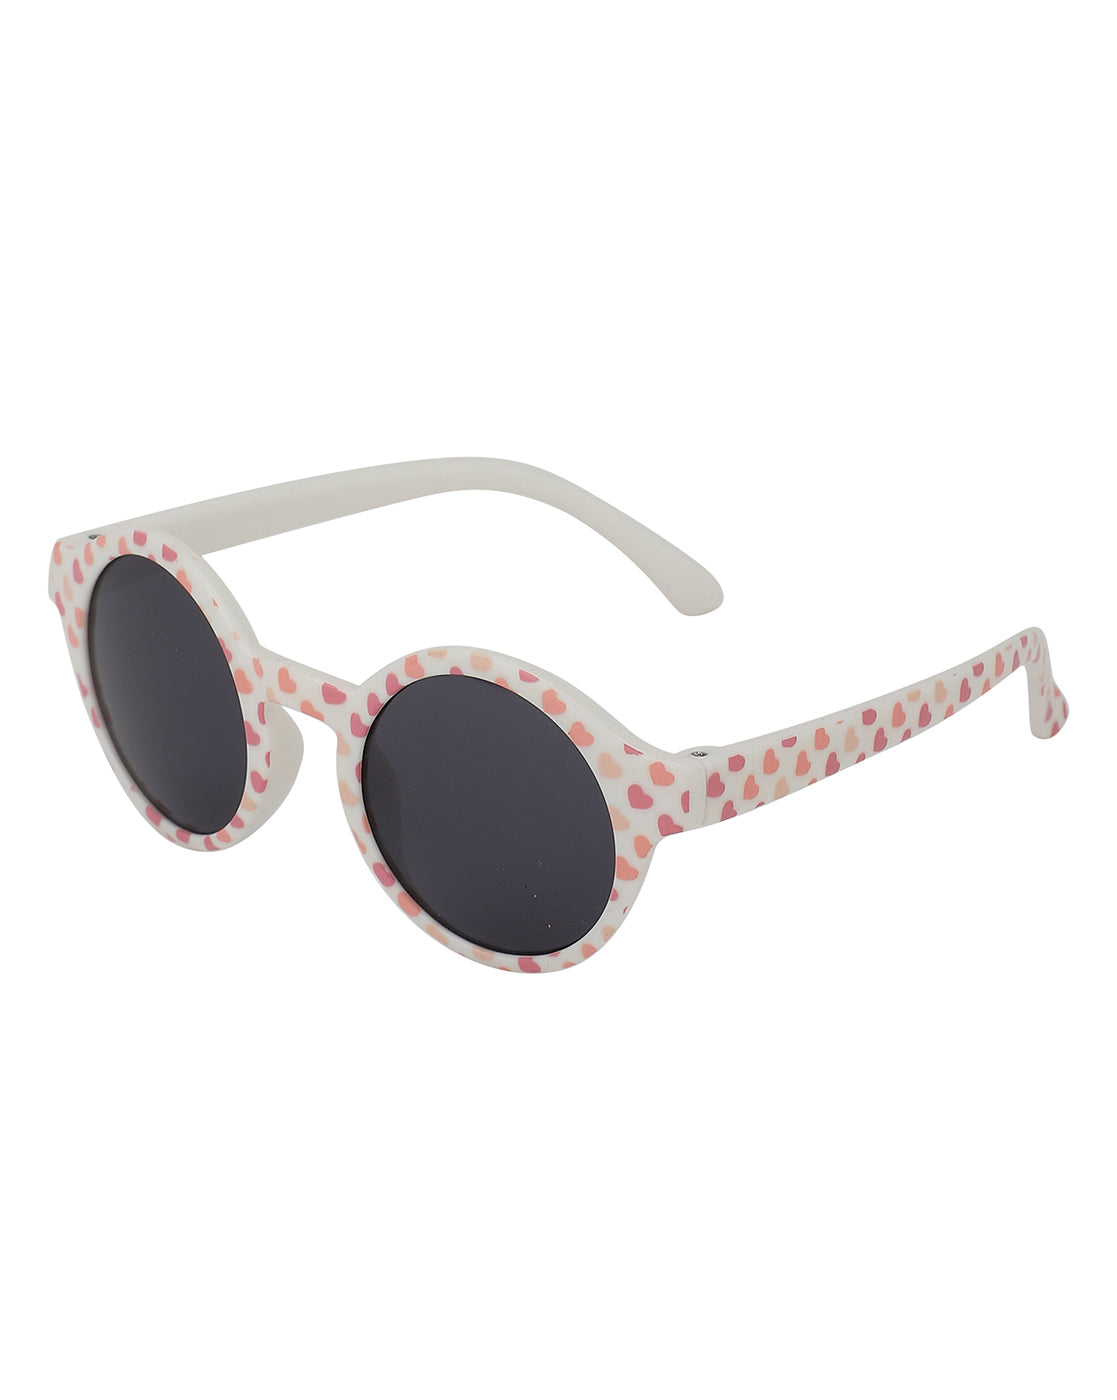 Buy Sunglasses for Girls by CARLTON LONDON Online | Ajio.com